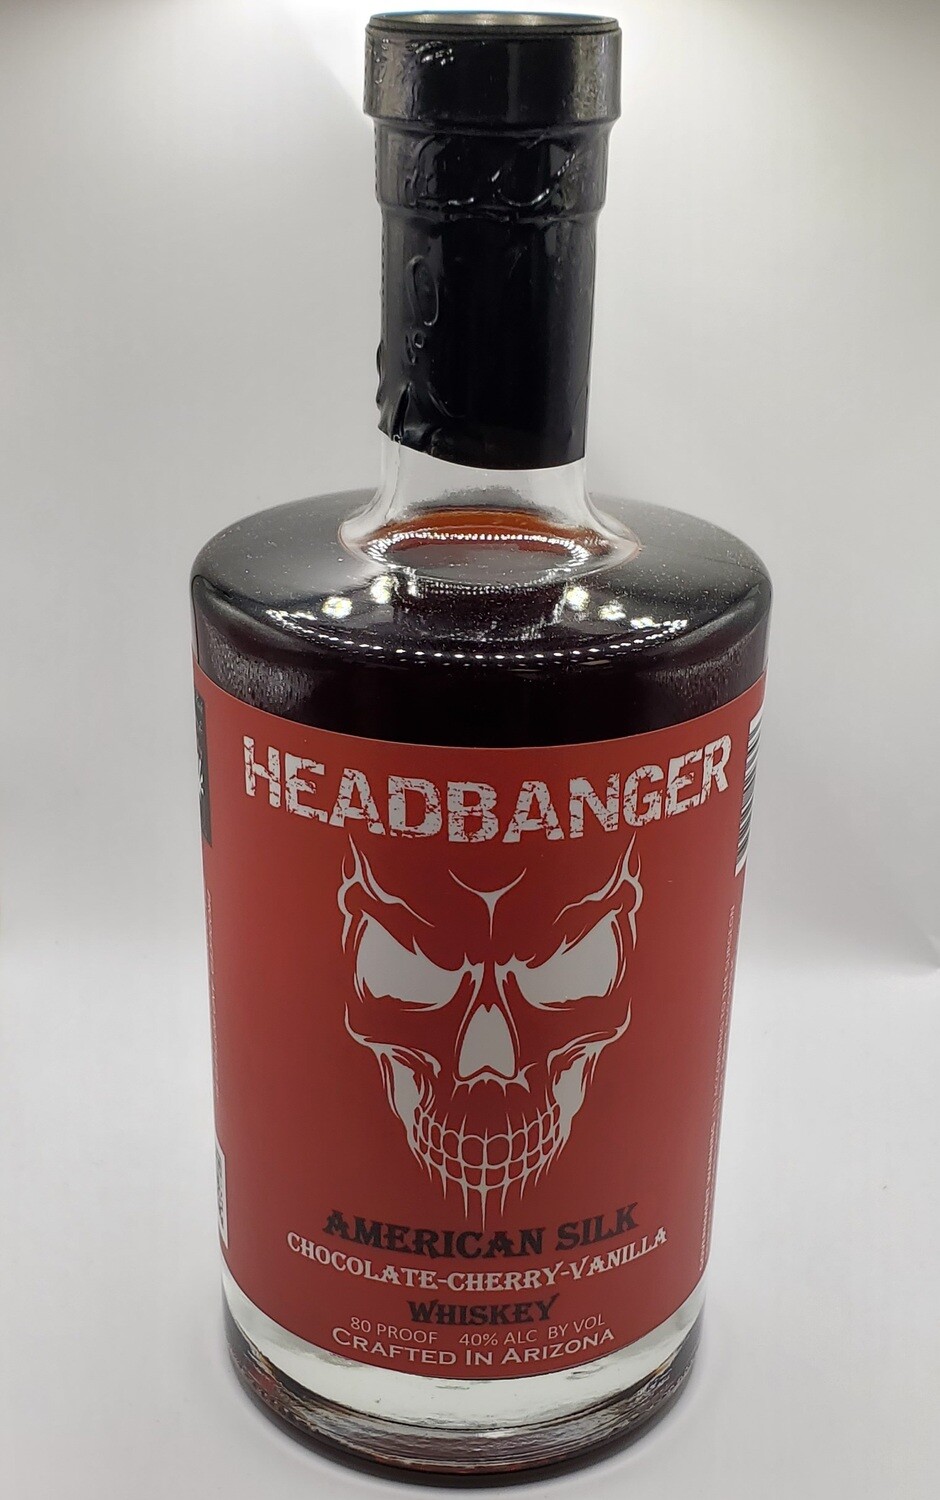 Headbanger "American Silk" Chocolate-Cherry-Vanilla Whiskey 80 Proof